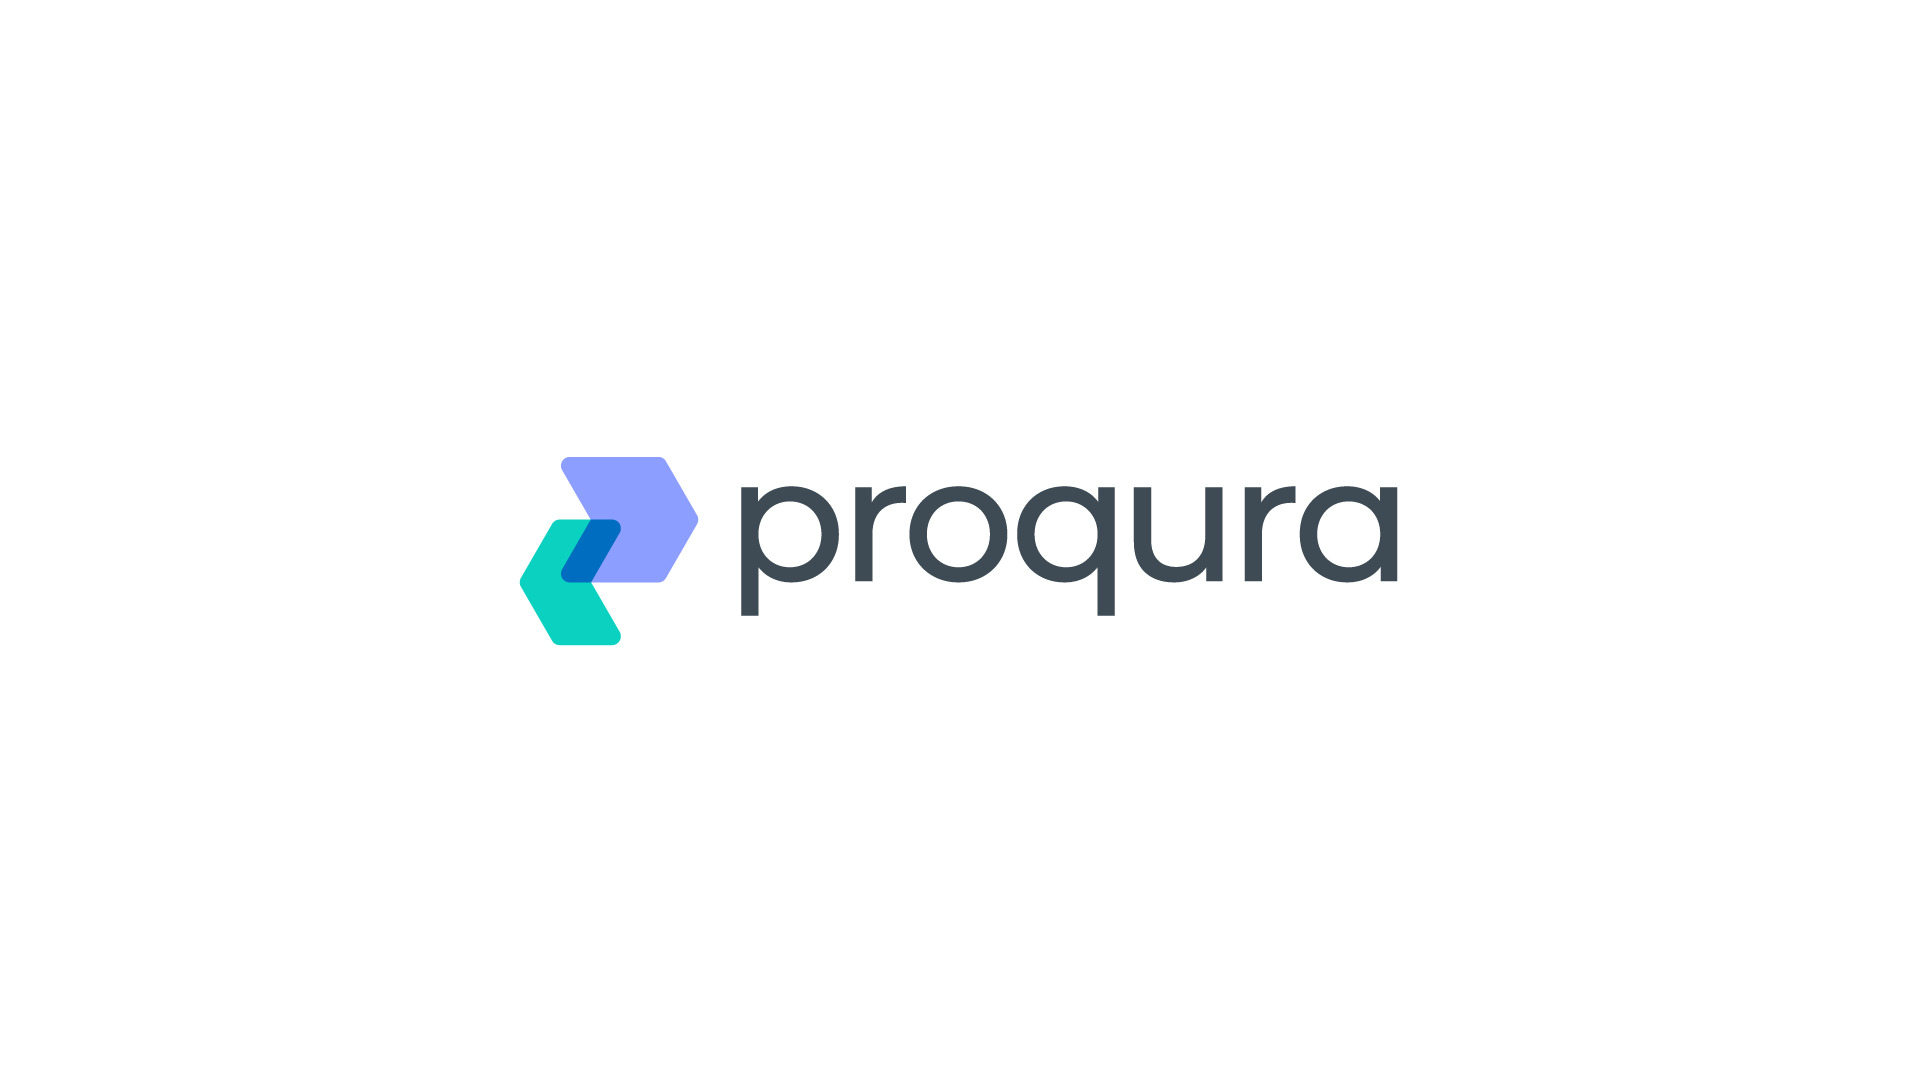 Procura - SaaS E-procurement Solution logo, abstract letter 'P' built with arrows, symbolizing dynamic and efficient procurement